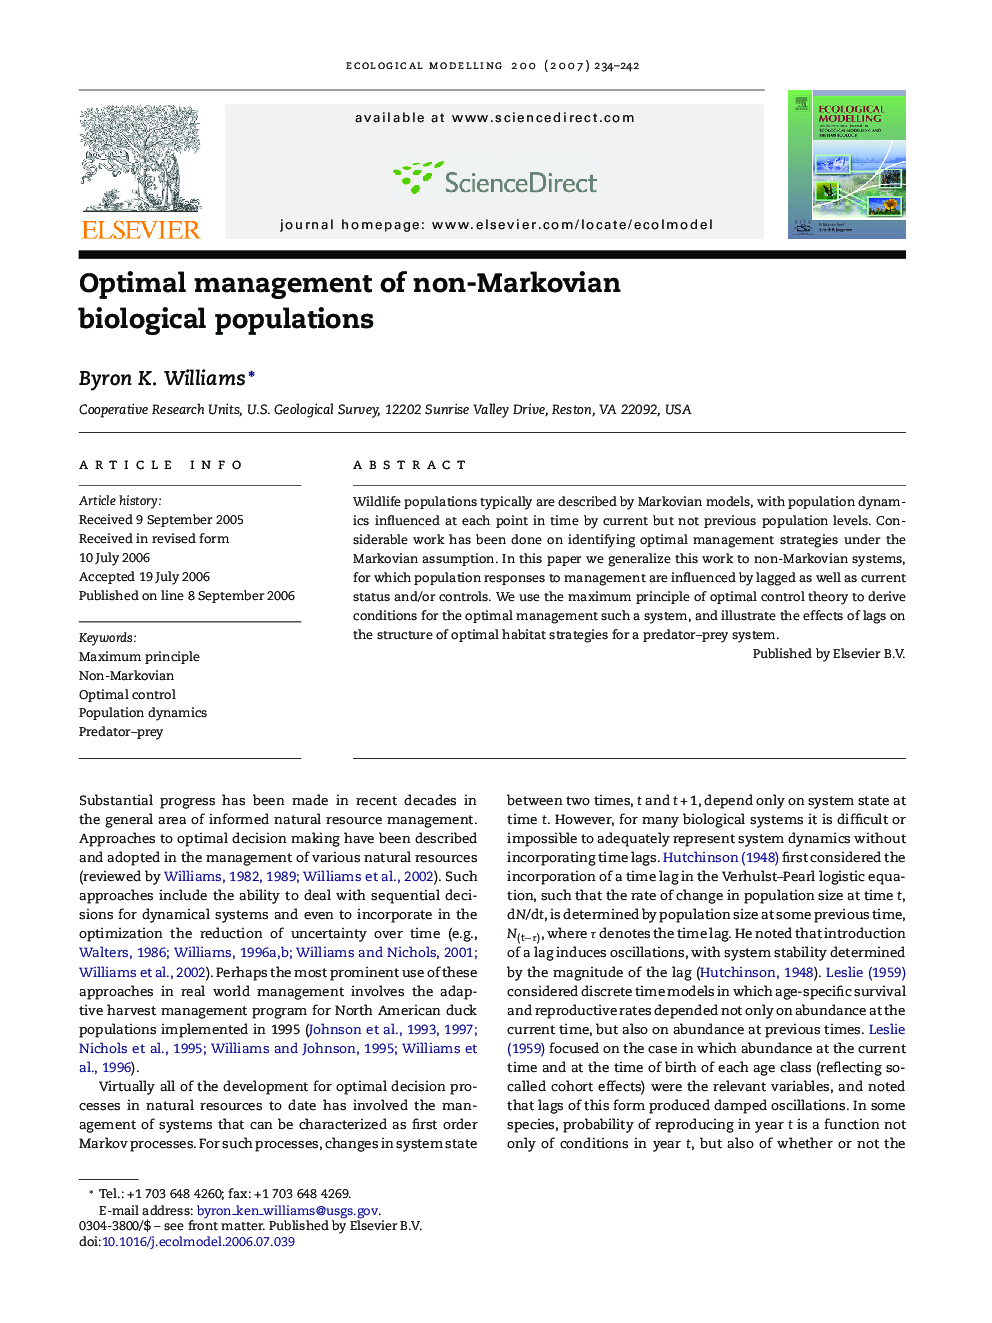 Optimal management of non-Markovian biological populations